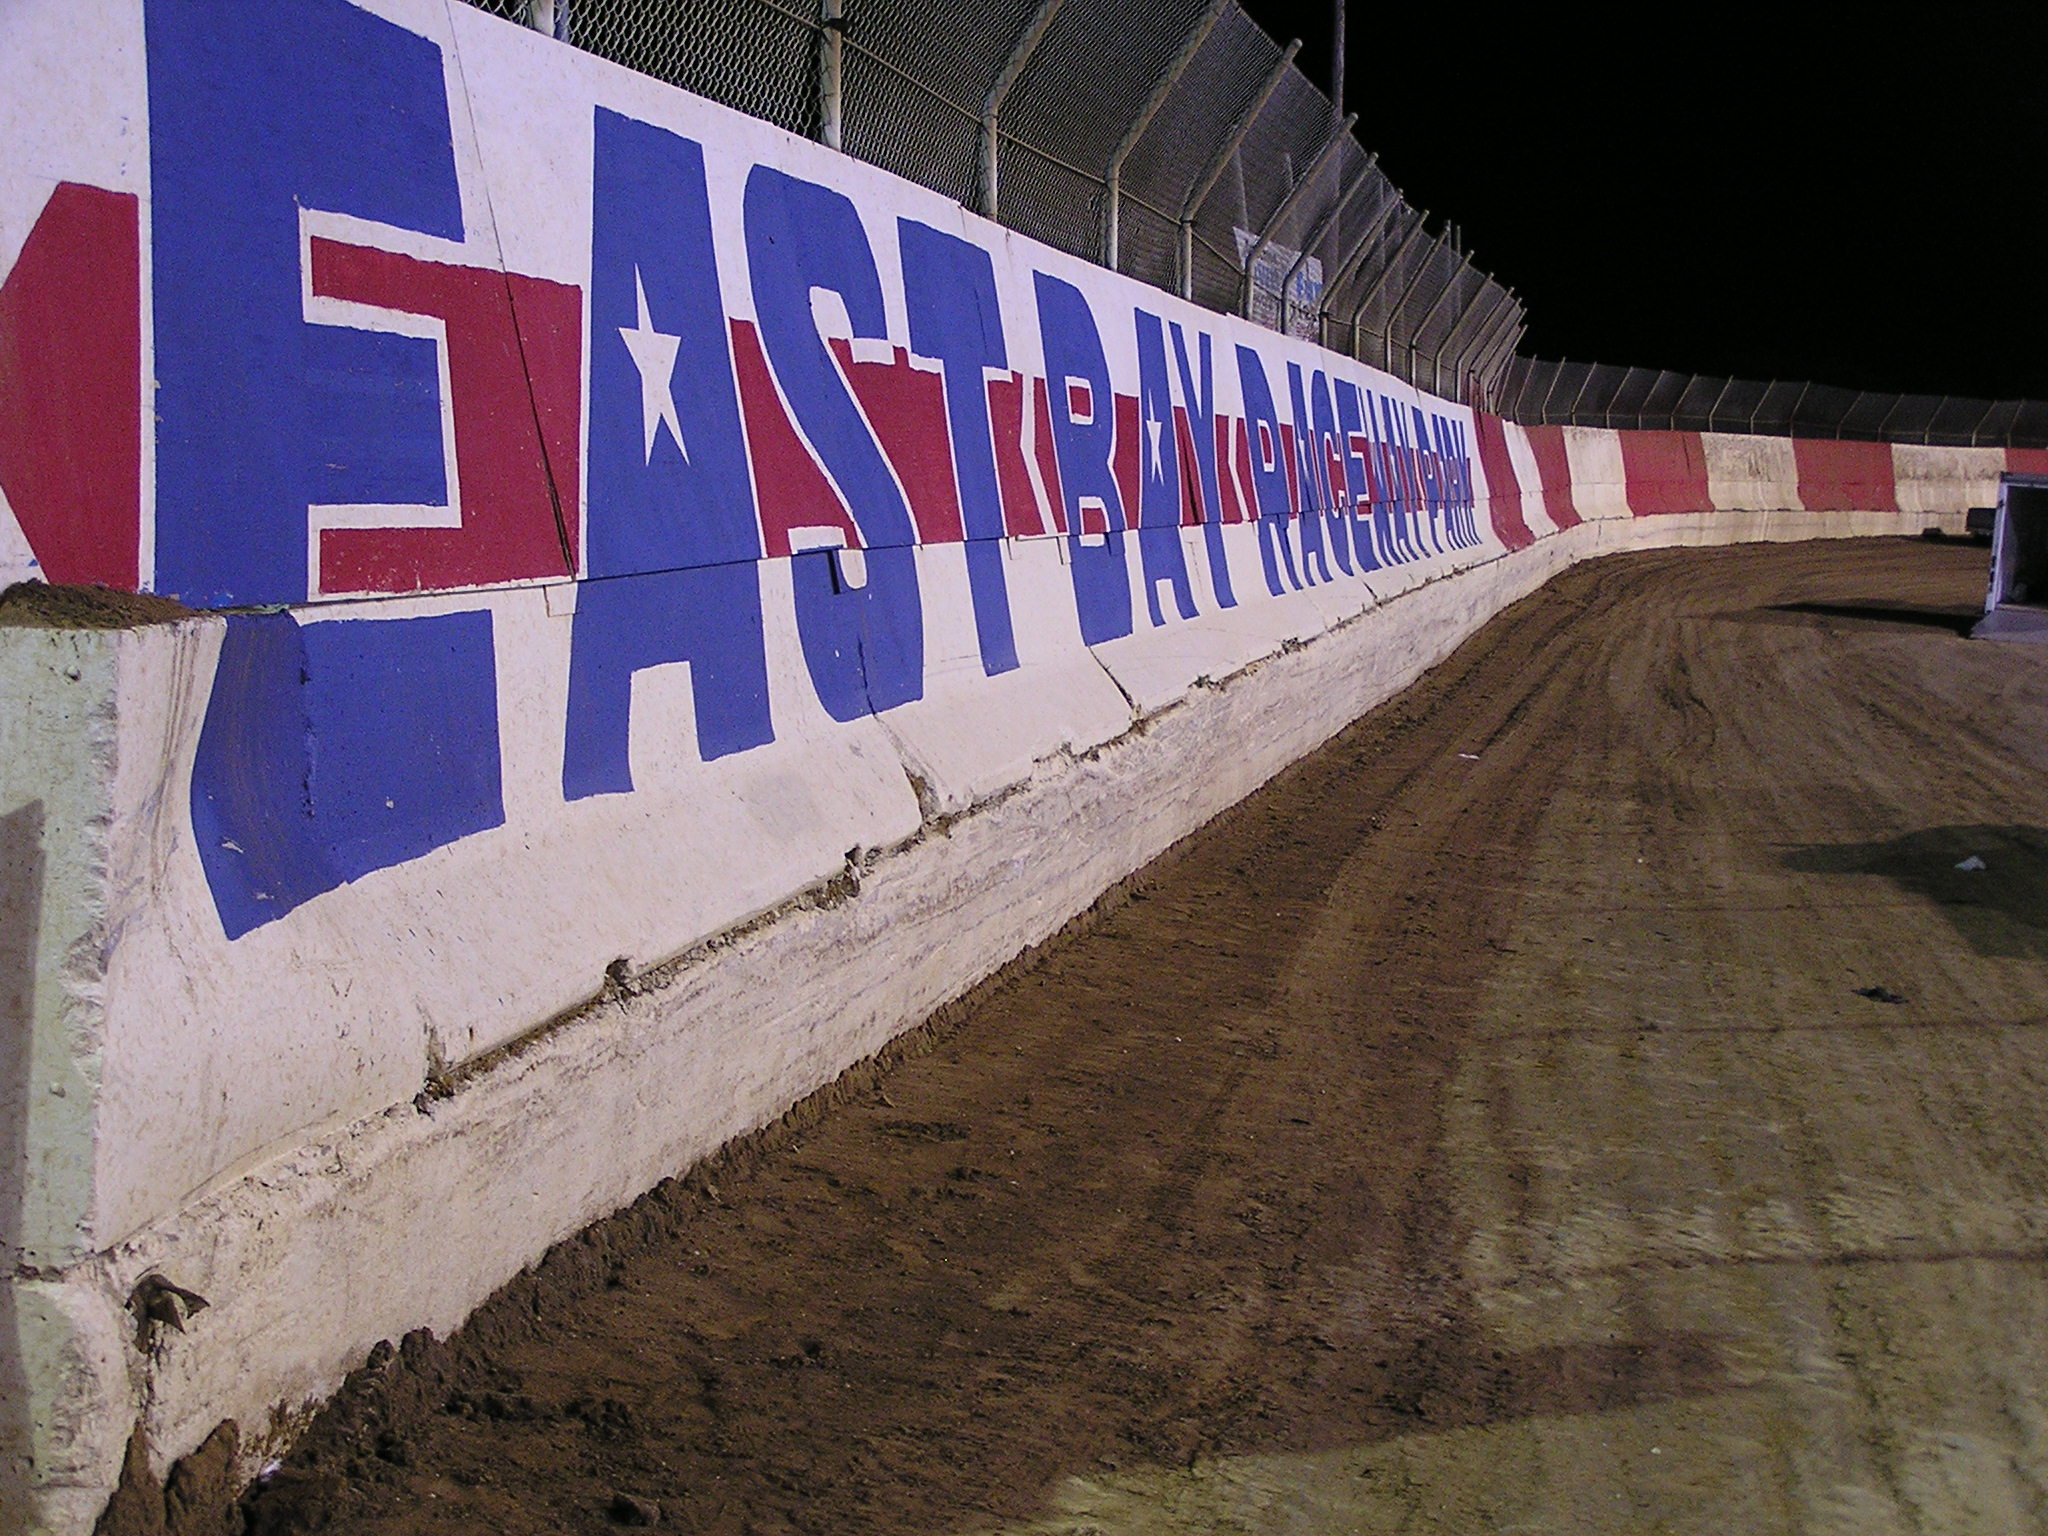 East Bay Raceway Park Randy Lewis